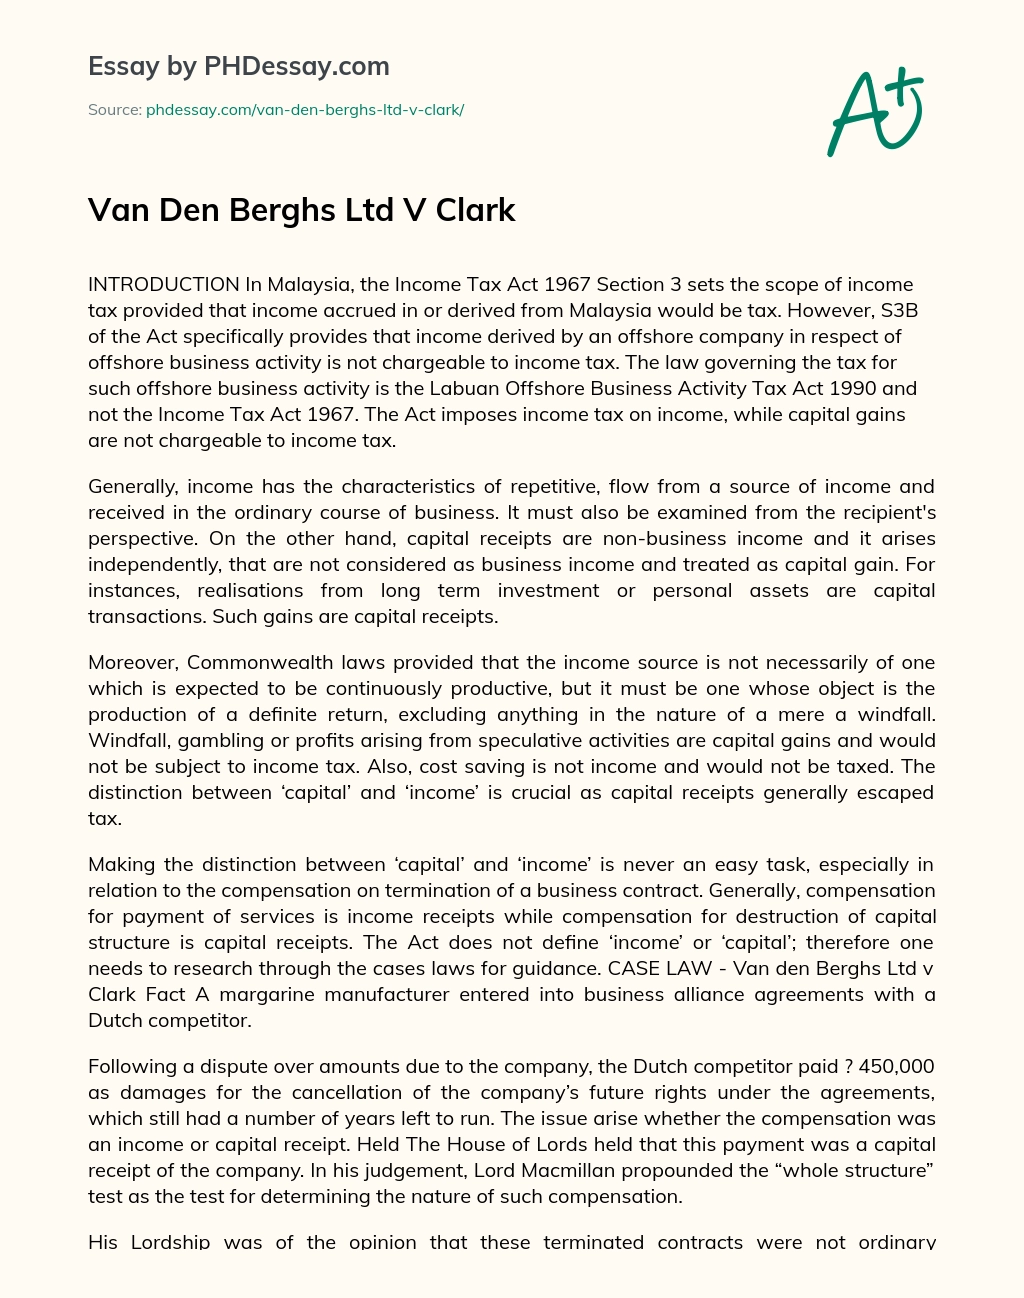 Van Den Berghs Ltd V Clark essay